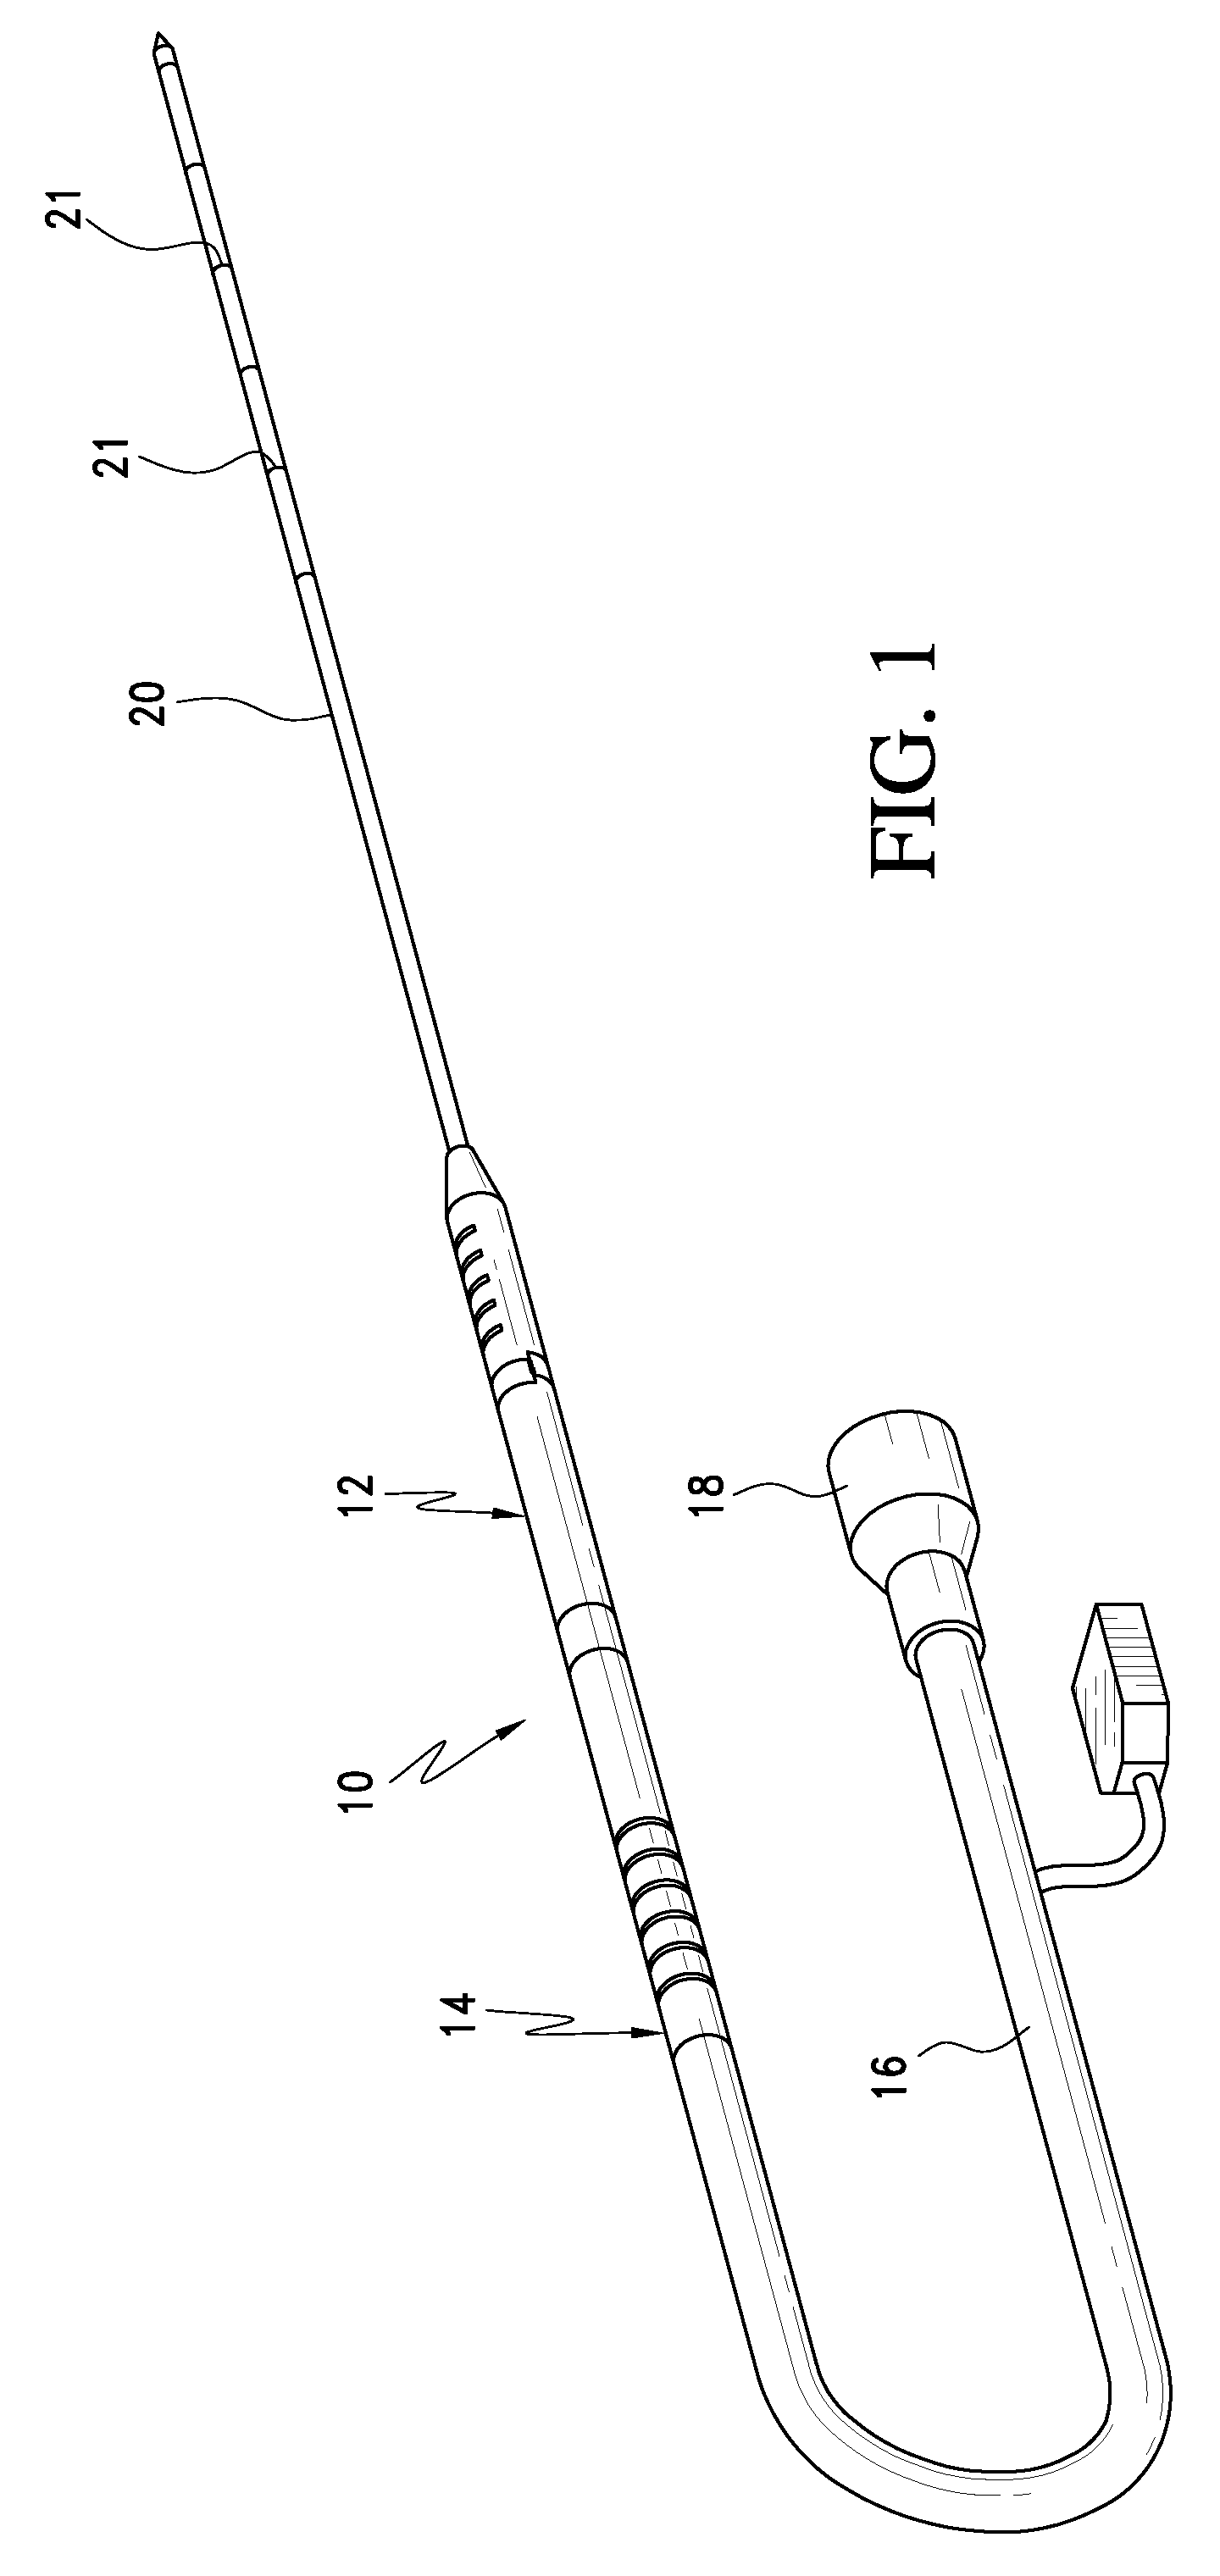 Cryosurgical probe with adjustable sliding apparatus